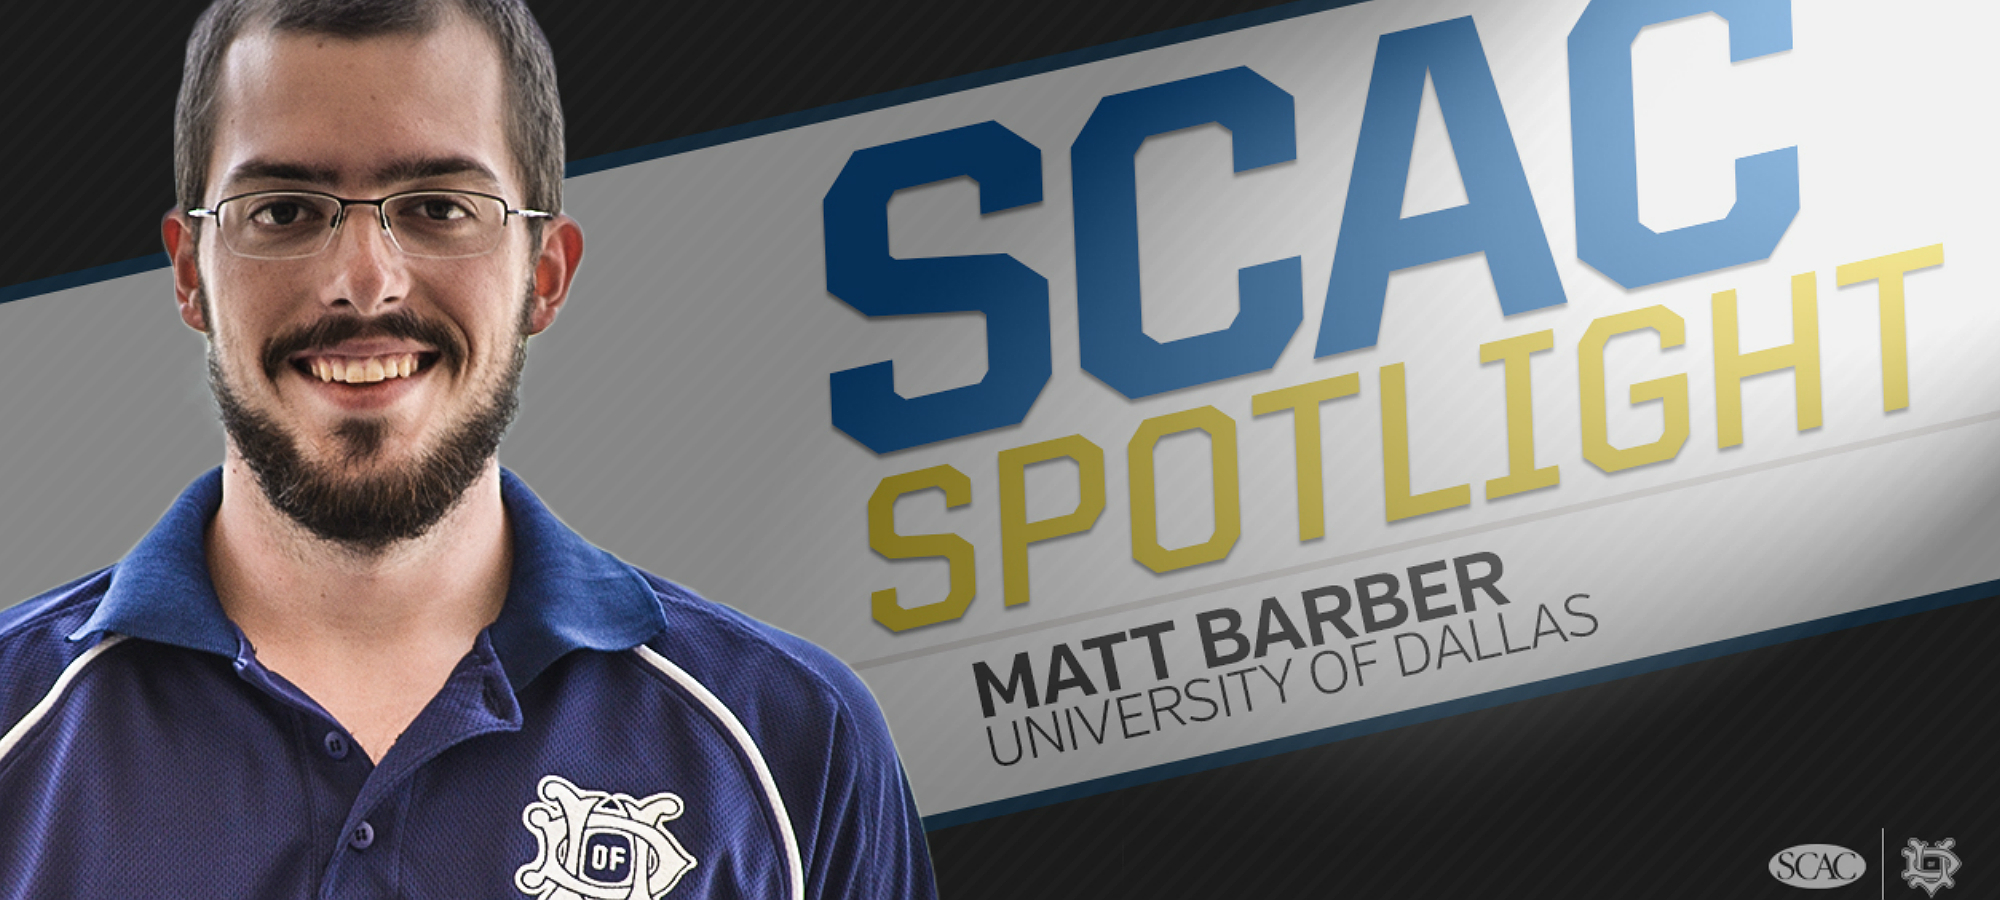 Cross Country/Track & Field Head Coach Matt Barber Featured on SCAC Spotlight